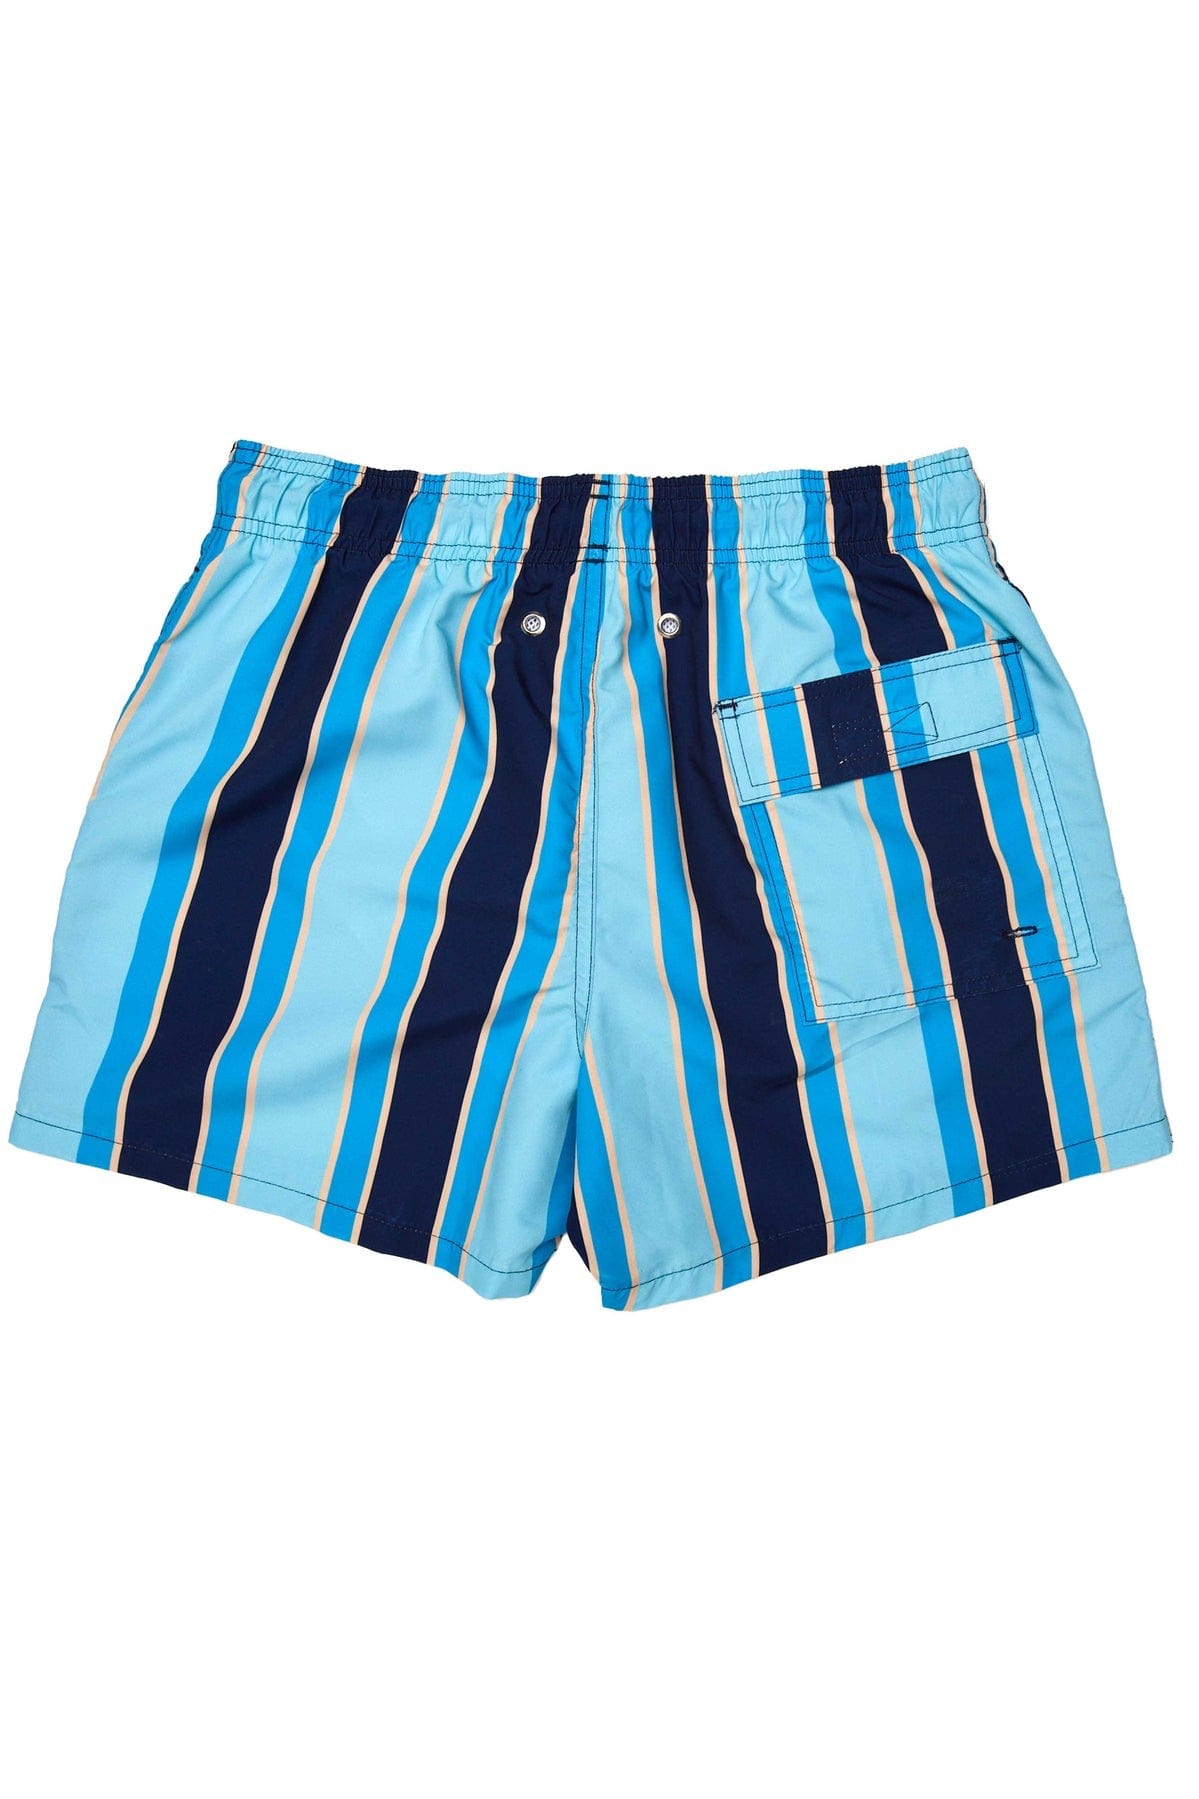 Le Club Apparel & Accessories > Clothing > Shorts Le Club Men's Swim Trunk Haya Blue 2022 Le Club Men's Swim Trunk Haya Blue